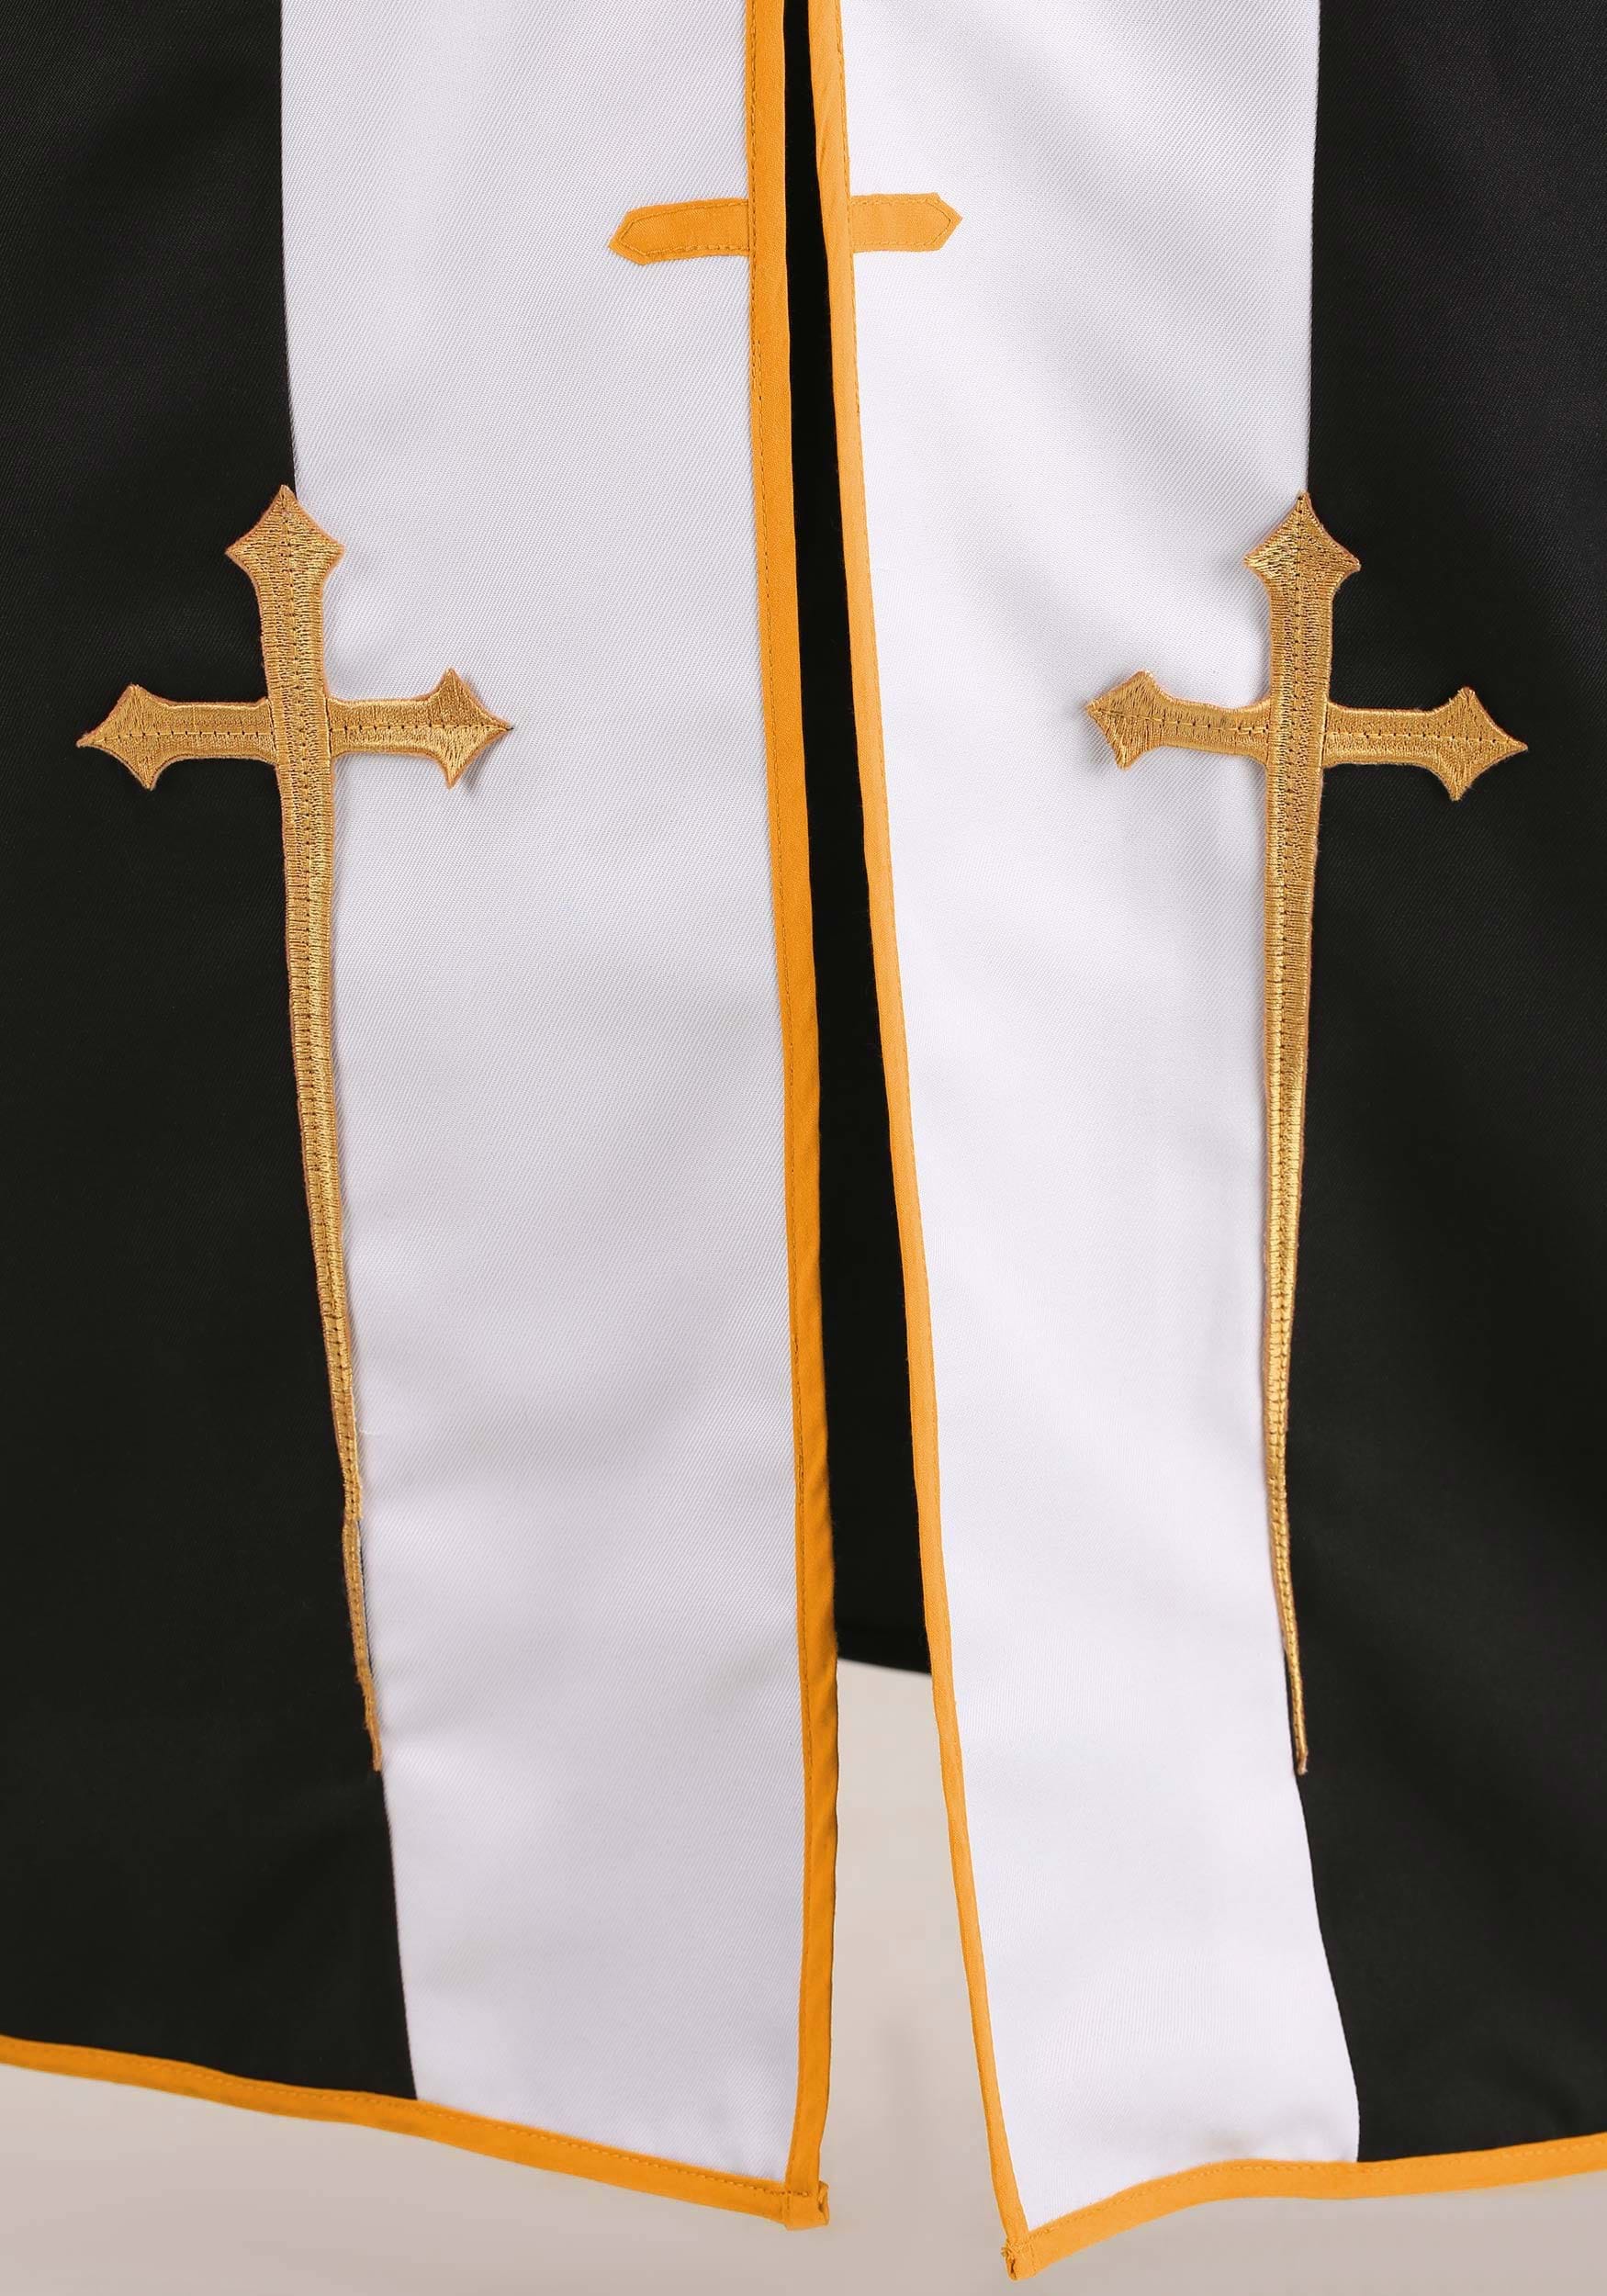 Men's Holy Priest Costume